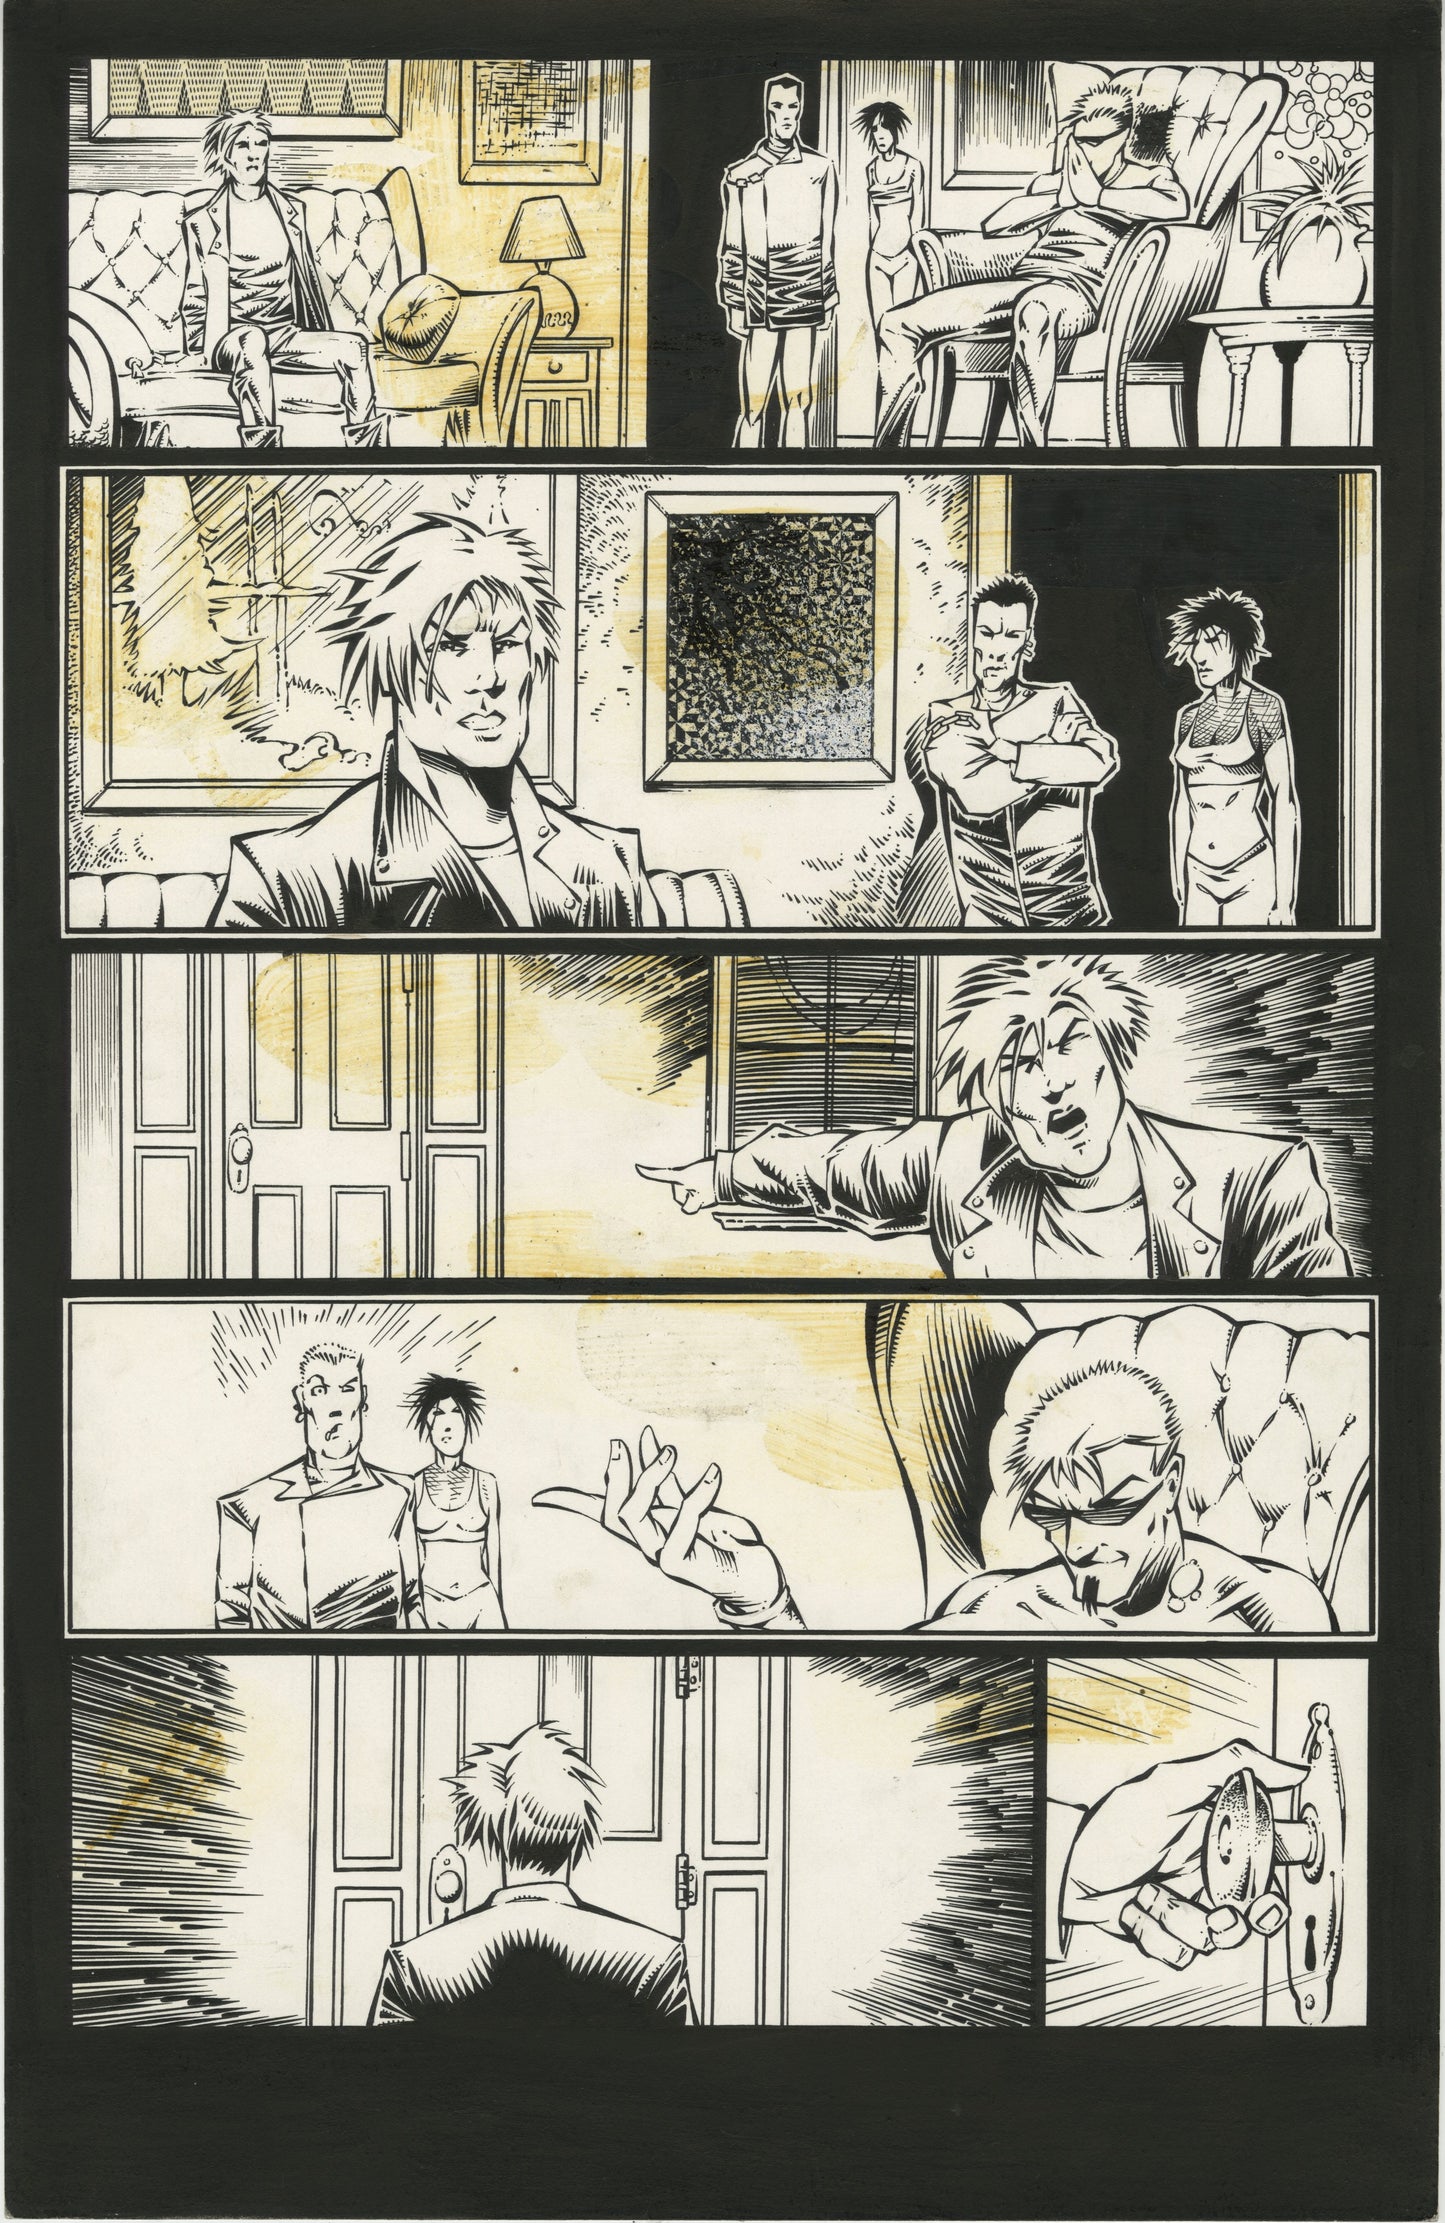 Dead Boys #1, page #19 (1997, unpublished)